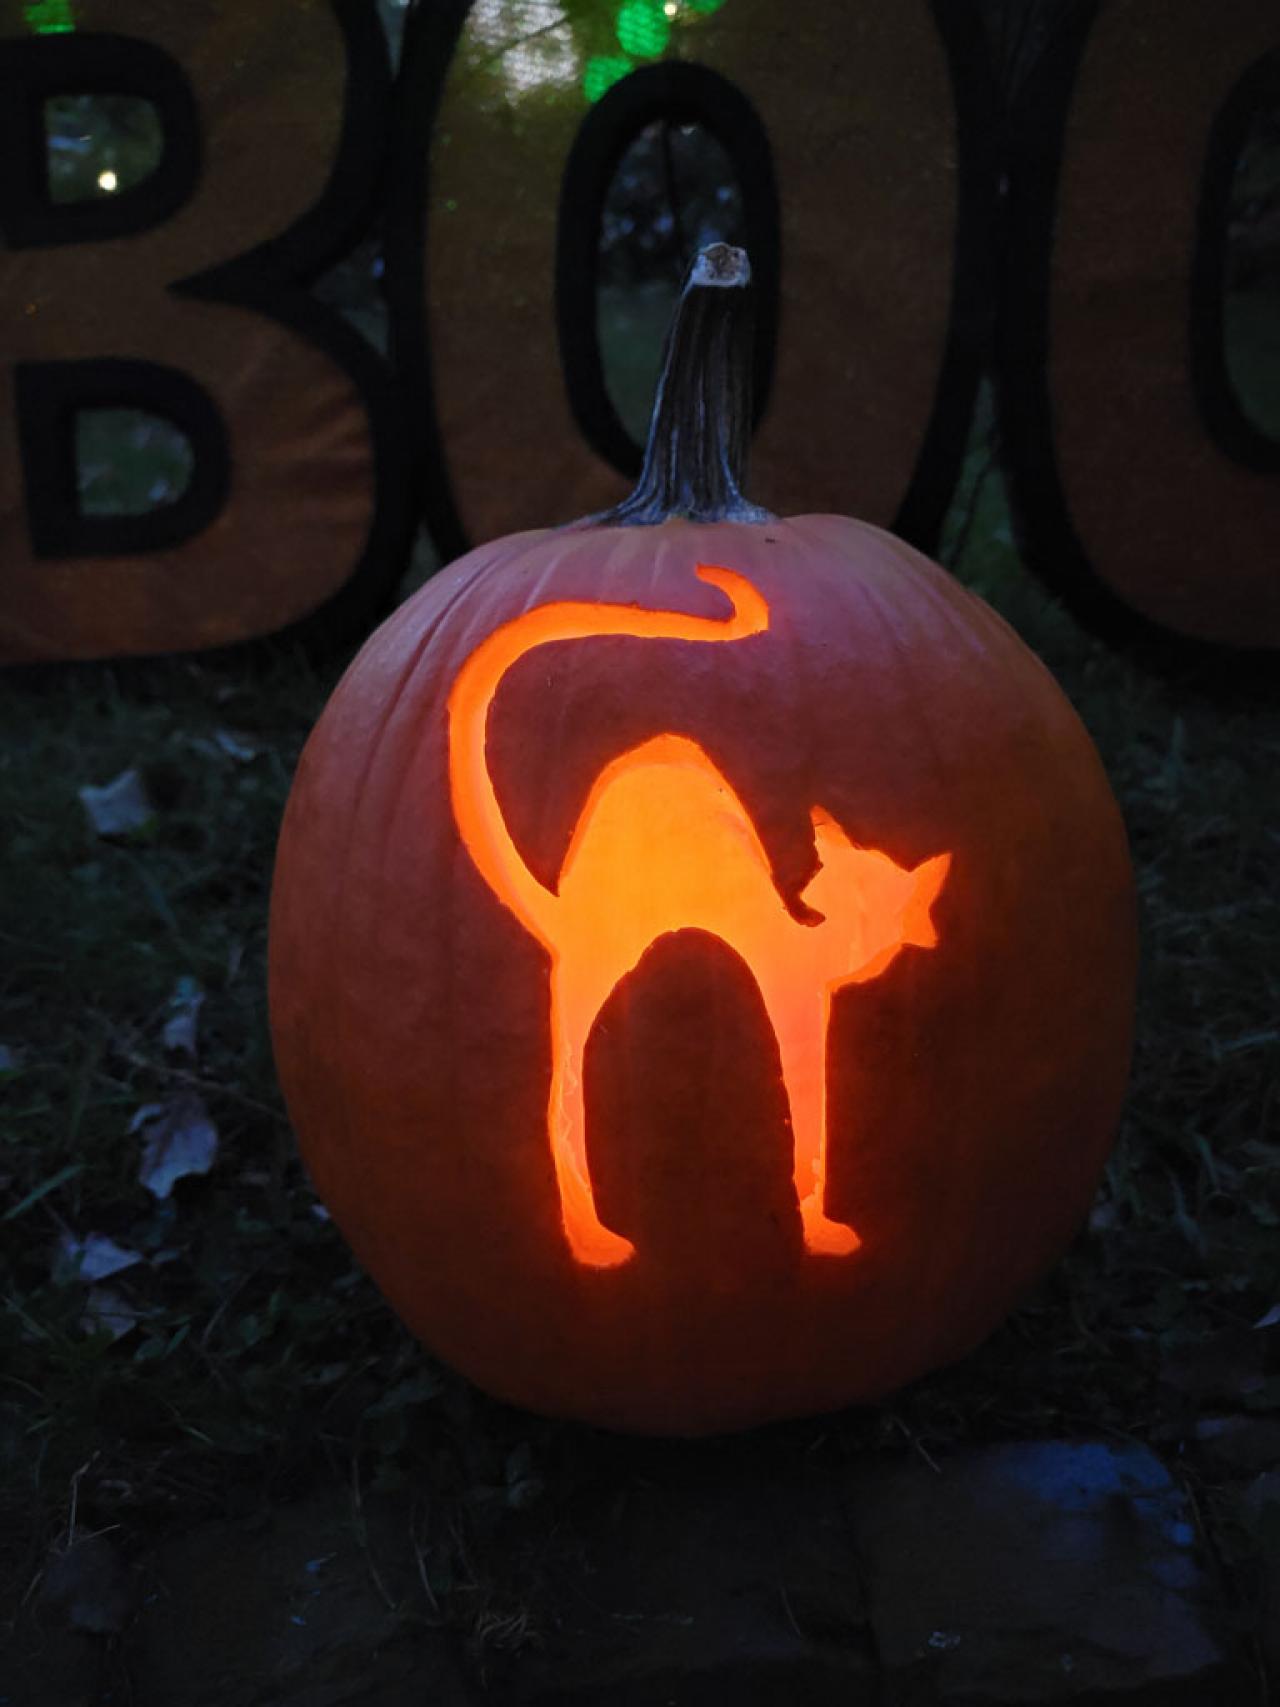 cat pumpkin designs